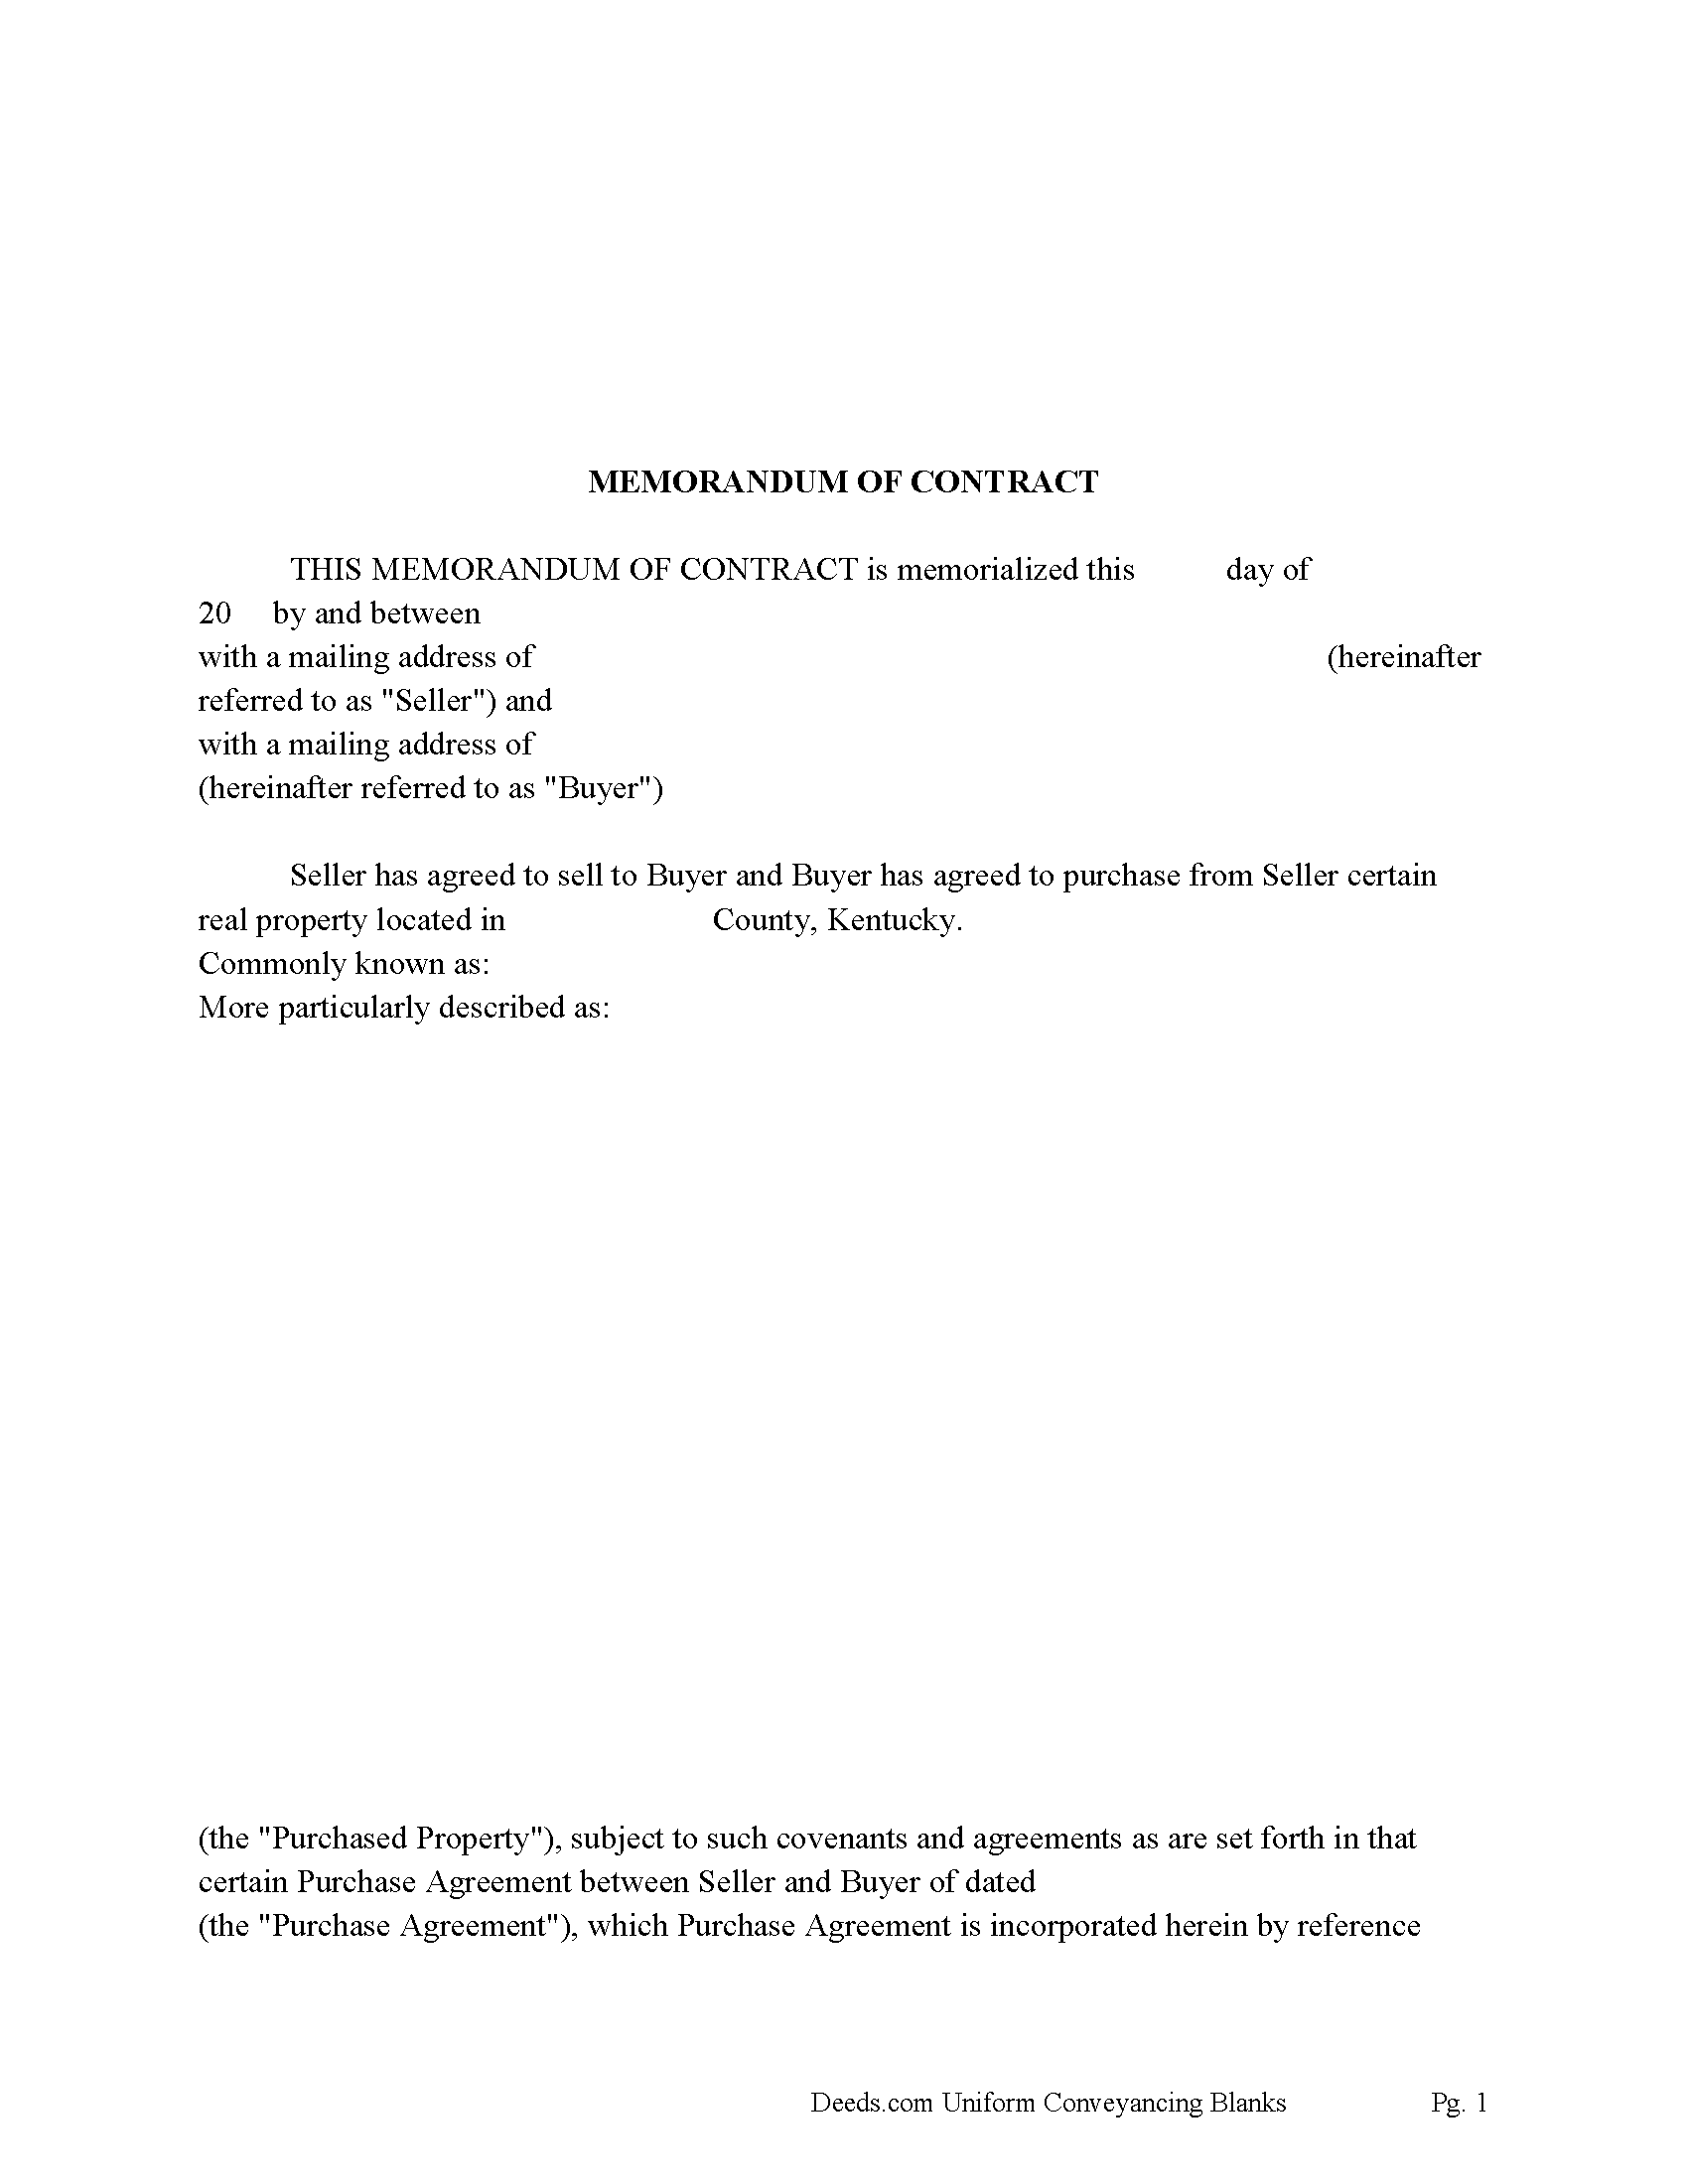 Memorandum of Contract